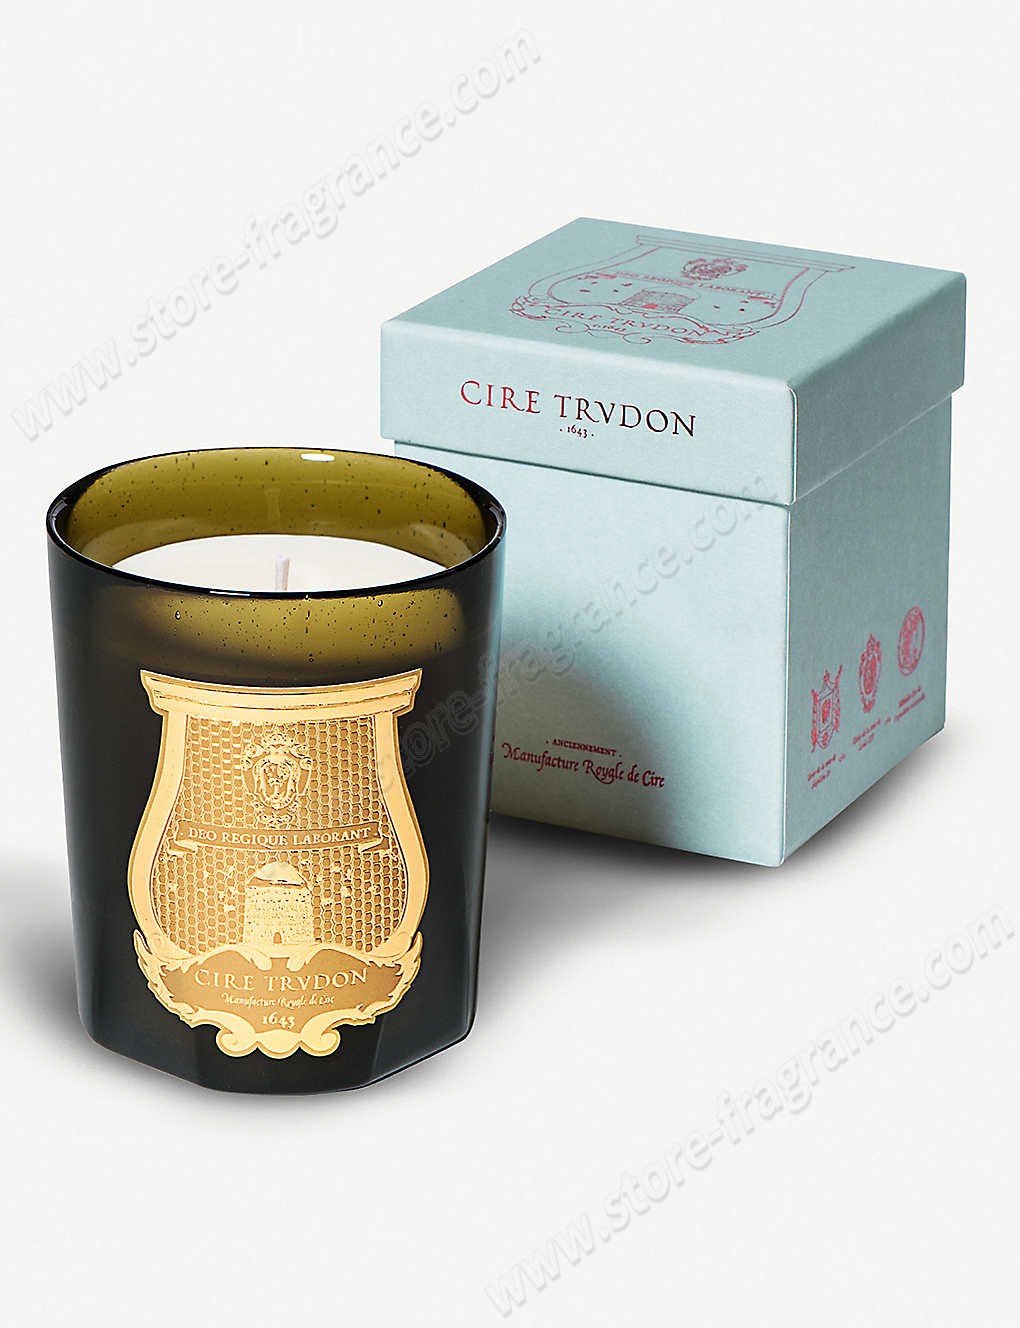 CIRE TRUDON/Abd El Khader scented candle 270g ✿ Discount Store - CIRE TRUDON/Abd El Khader scented candle 270g ✿ Discount Store